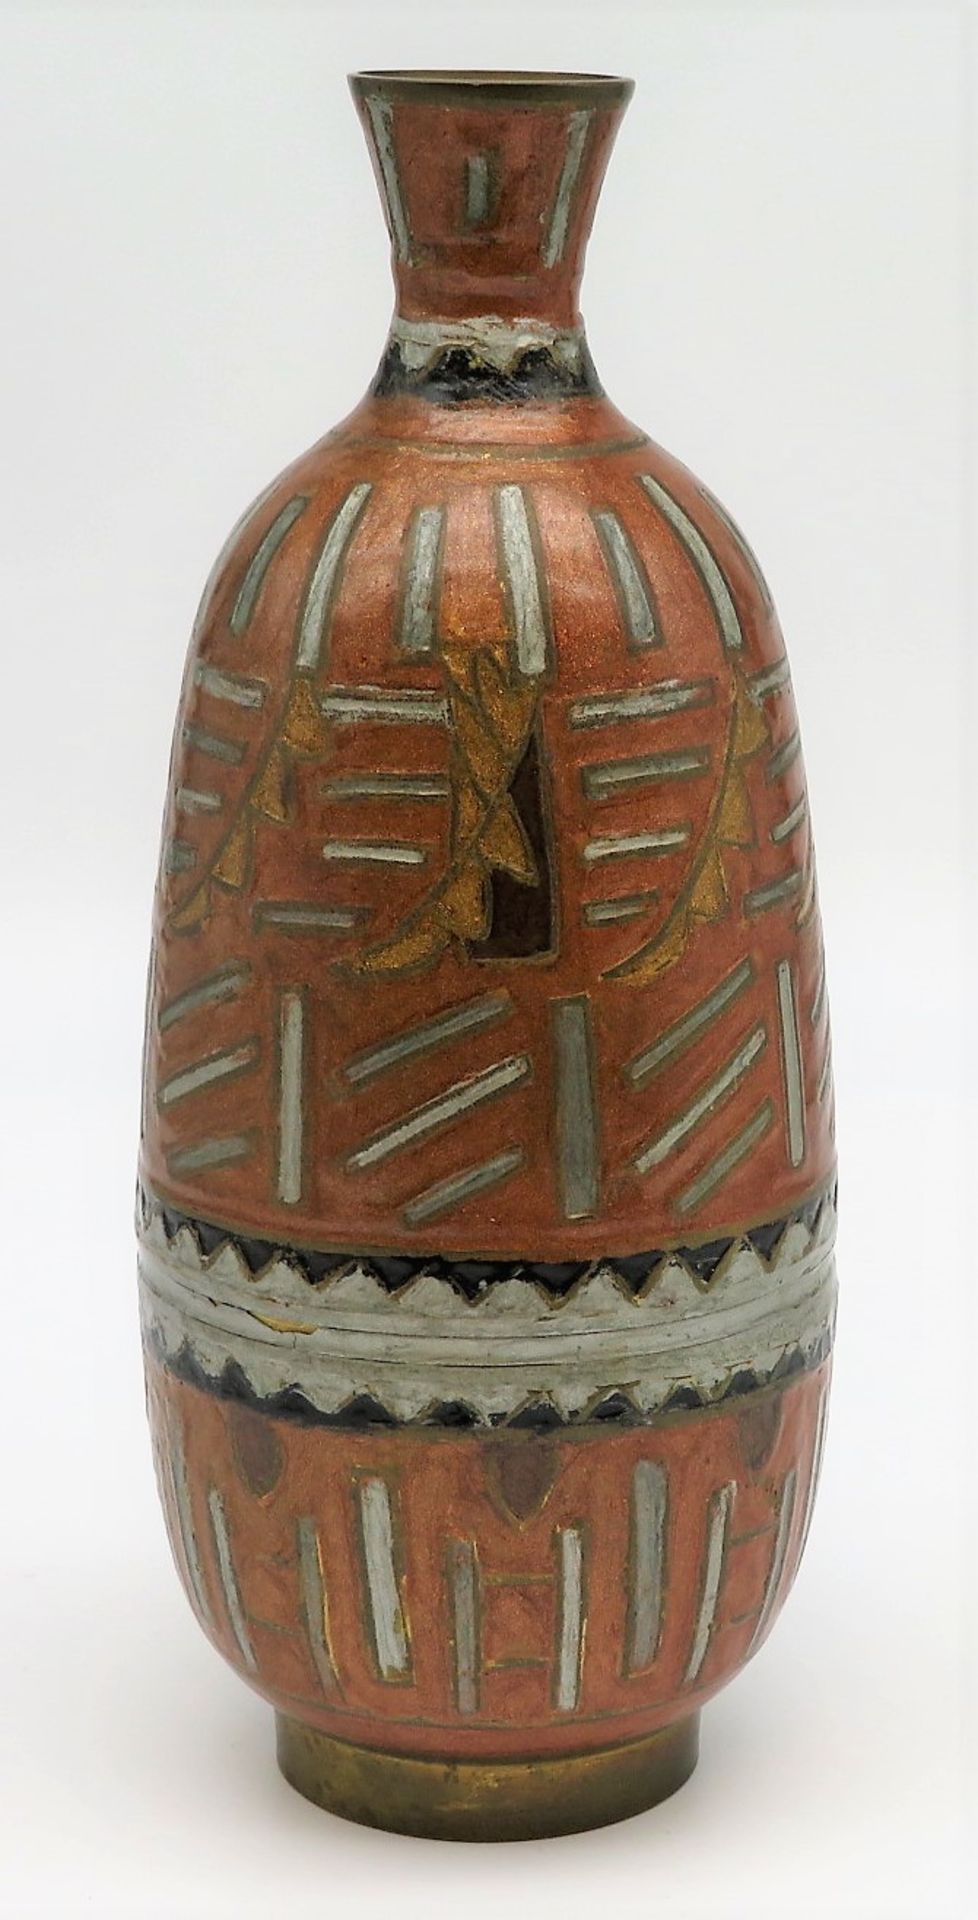 Emaille-Vase, Art Déco, um 1910, Messing mit farbiger Emaillierung, h 26 cm, d 11 cm.